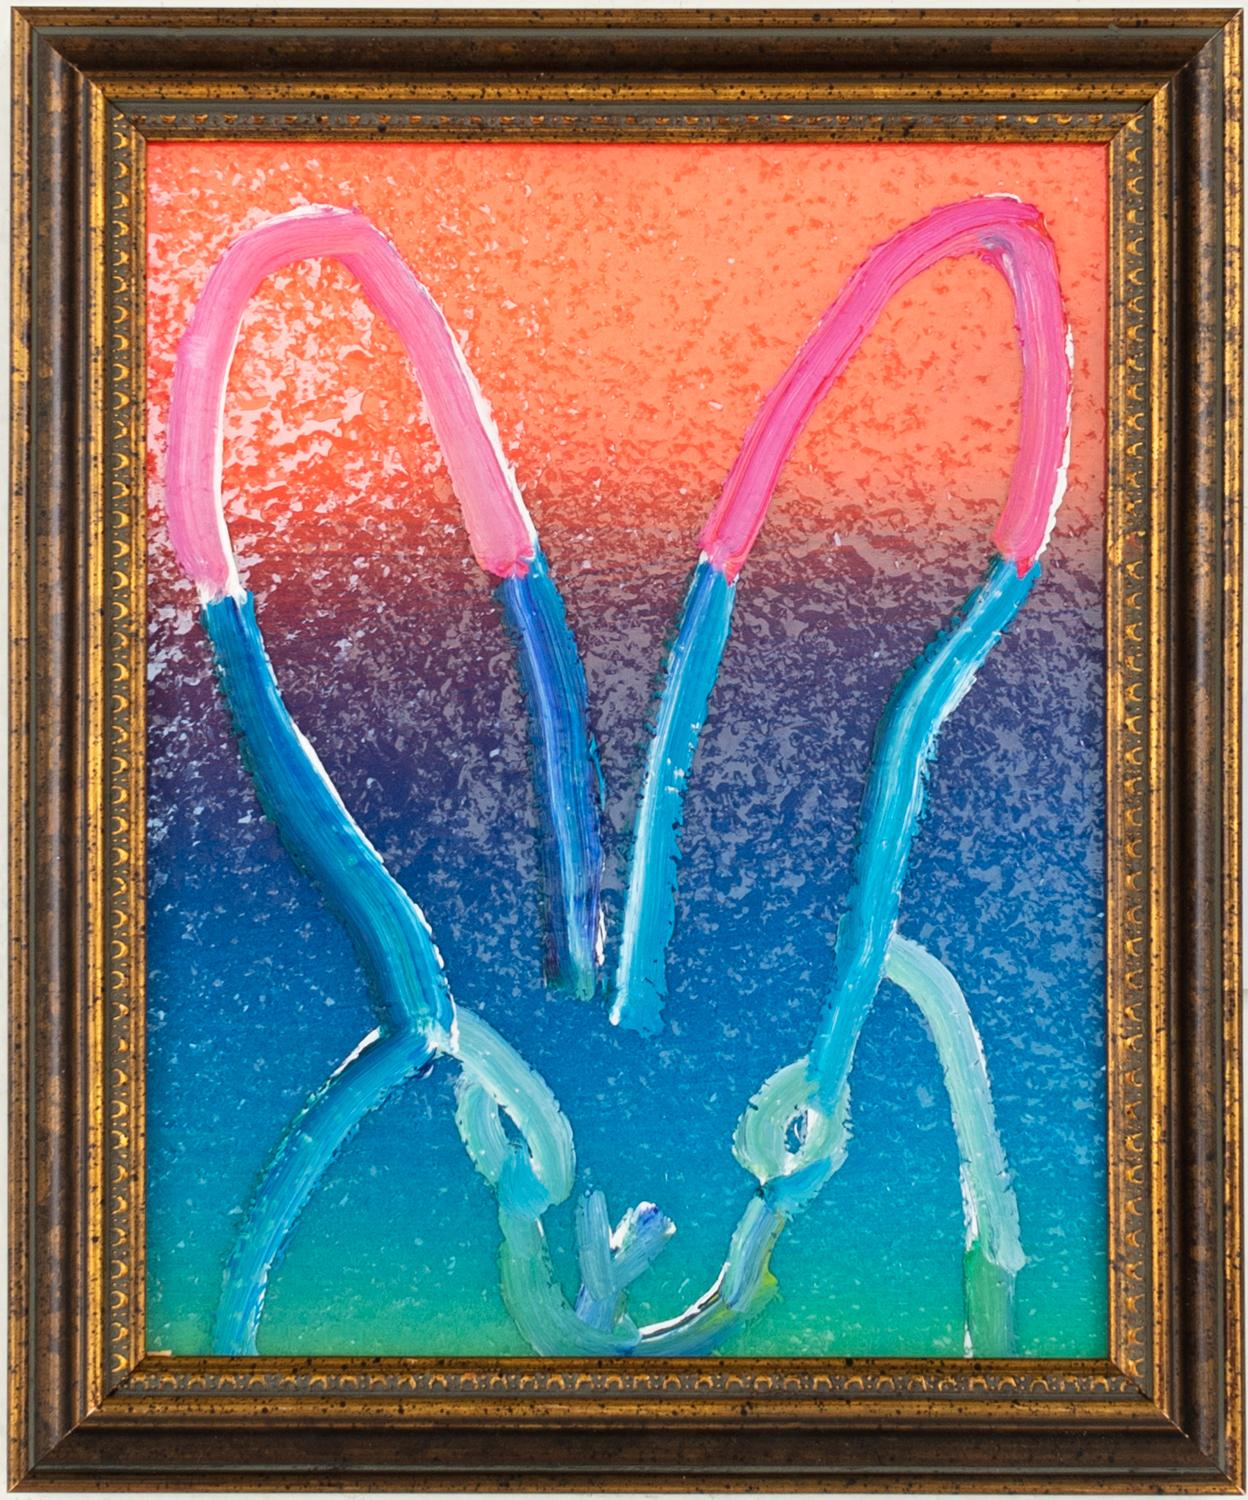 Hunt Slonem Figurative Painting – Blauer Himmel „Bunny Painting“ Original Blaues und rosafarbenes Ölgemälde in Vintage-Rahmen